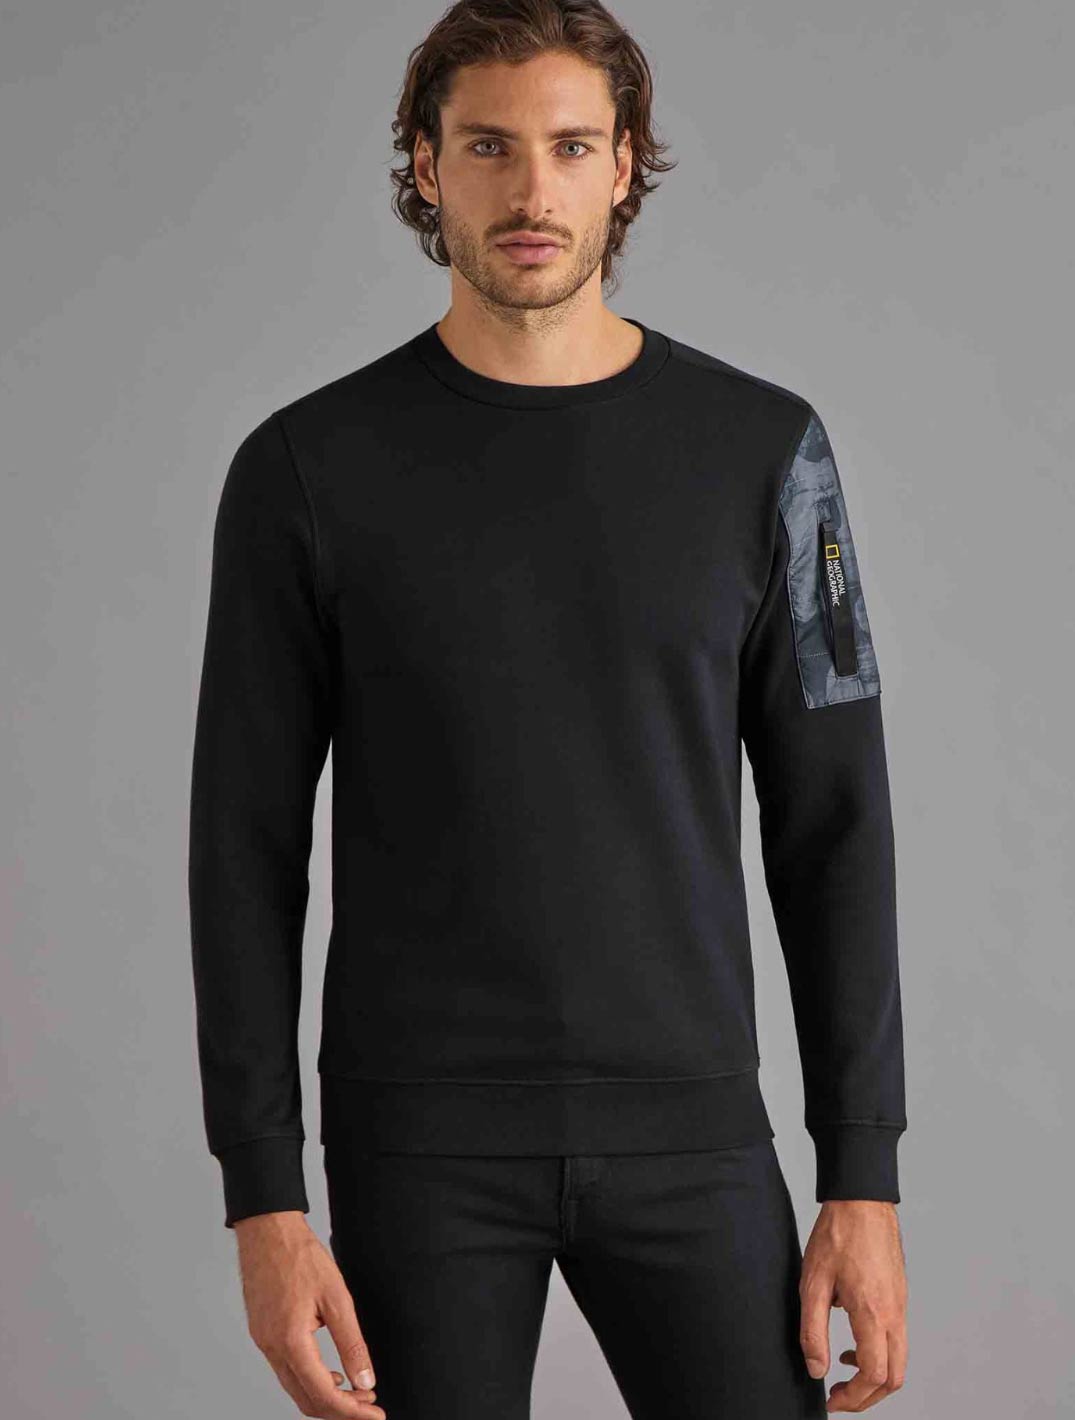 National Geographic Herren Sweater CREW NECK (schwarz)